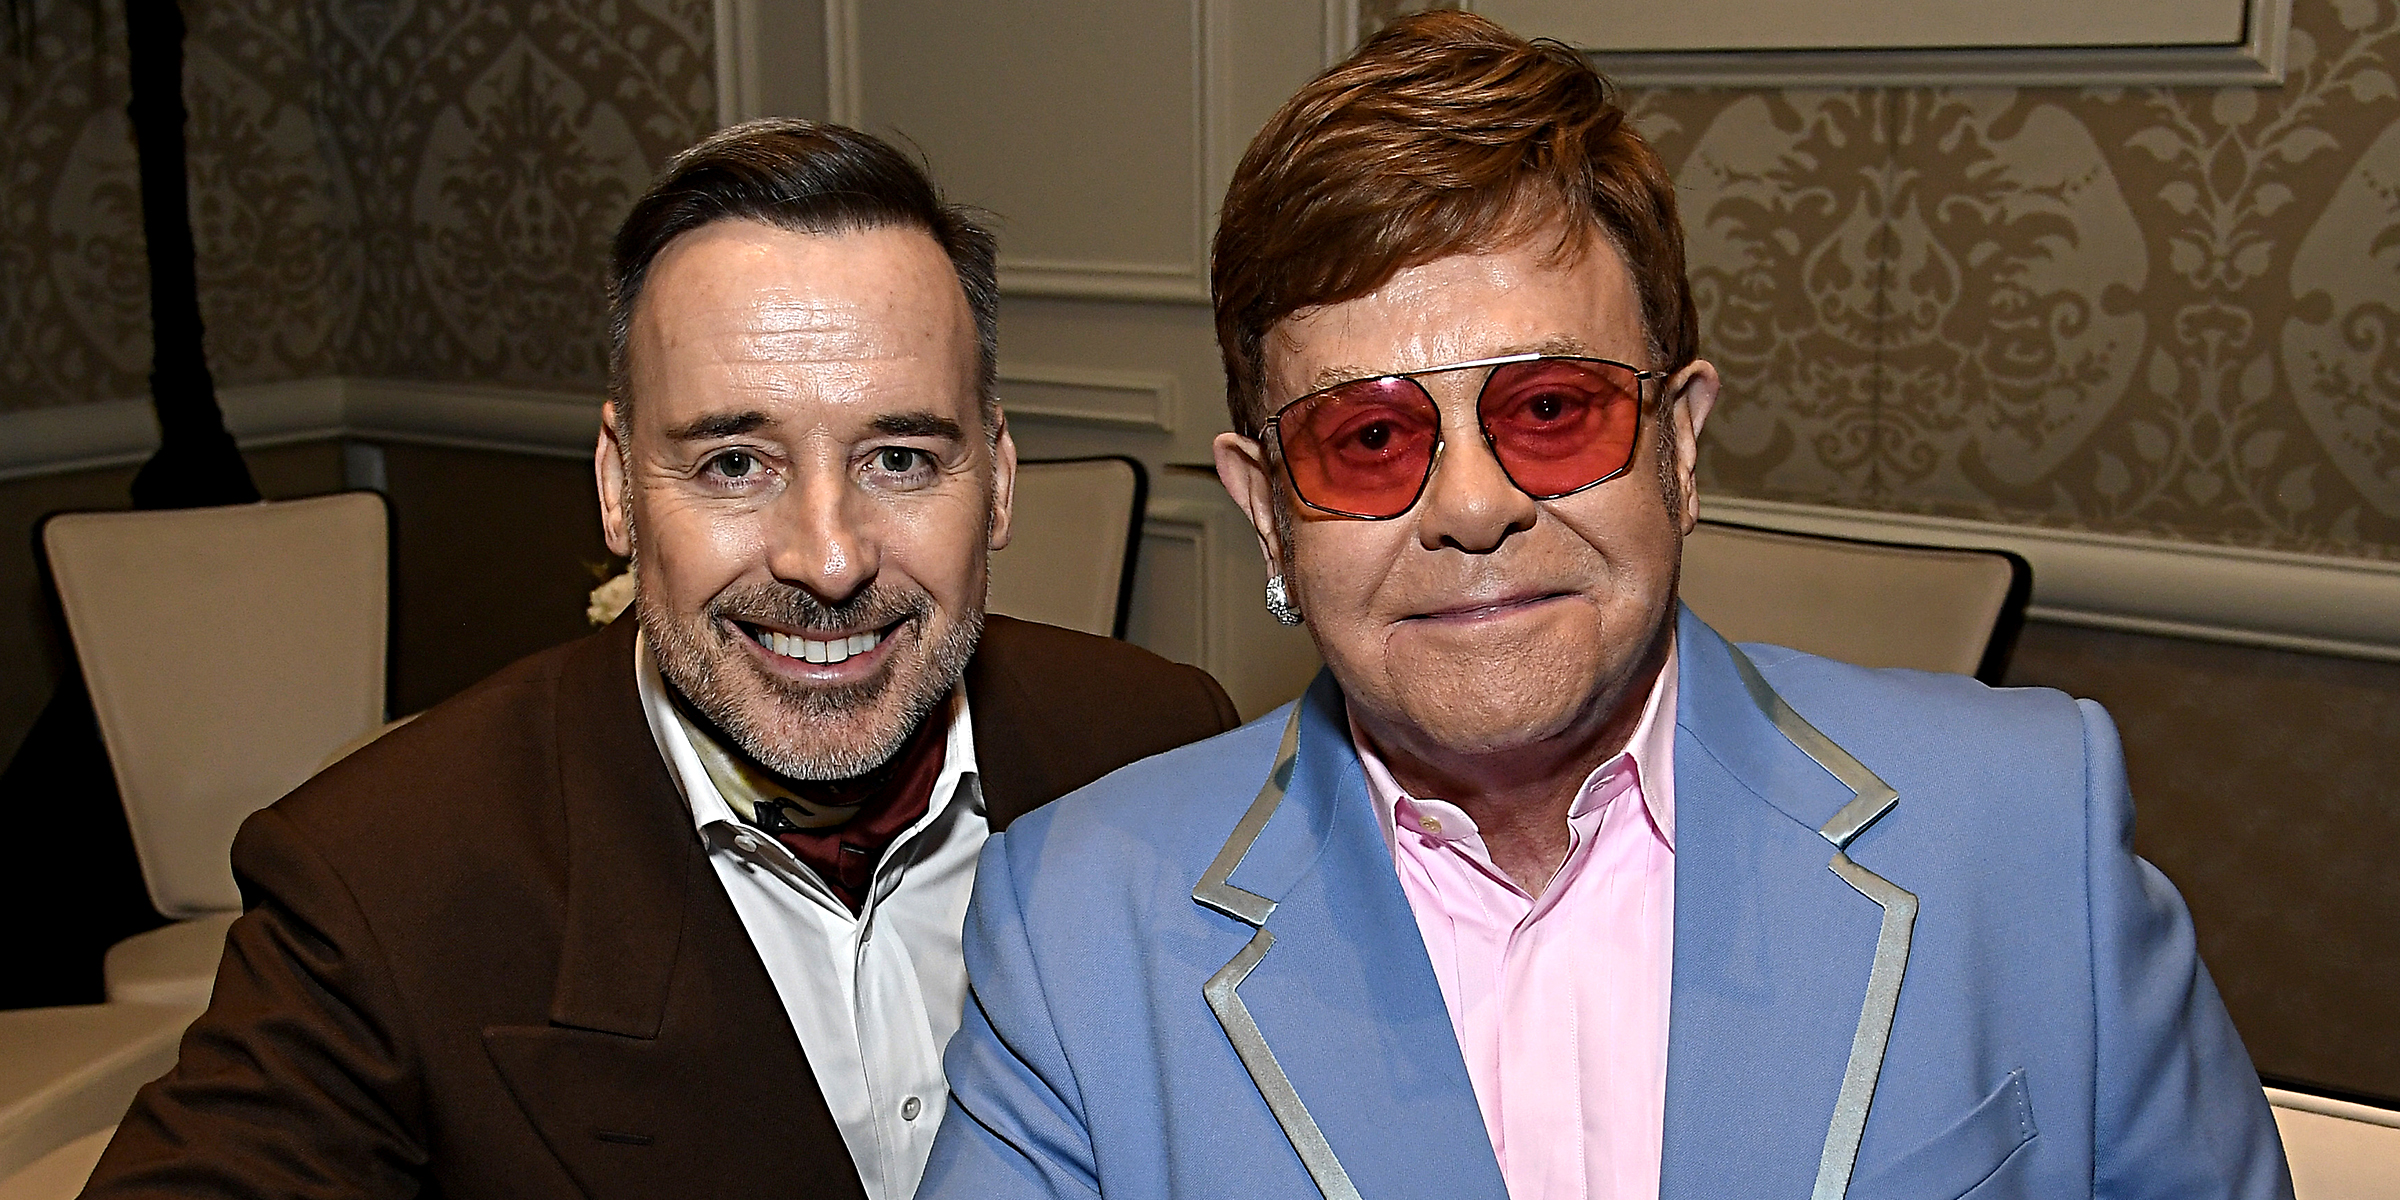 David Furnish and Sir Elton John. | Source: Getty Images